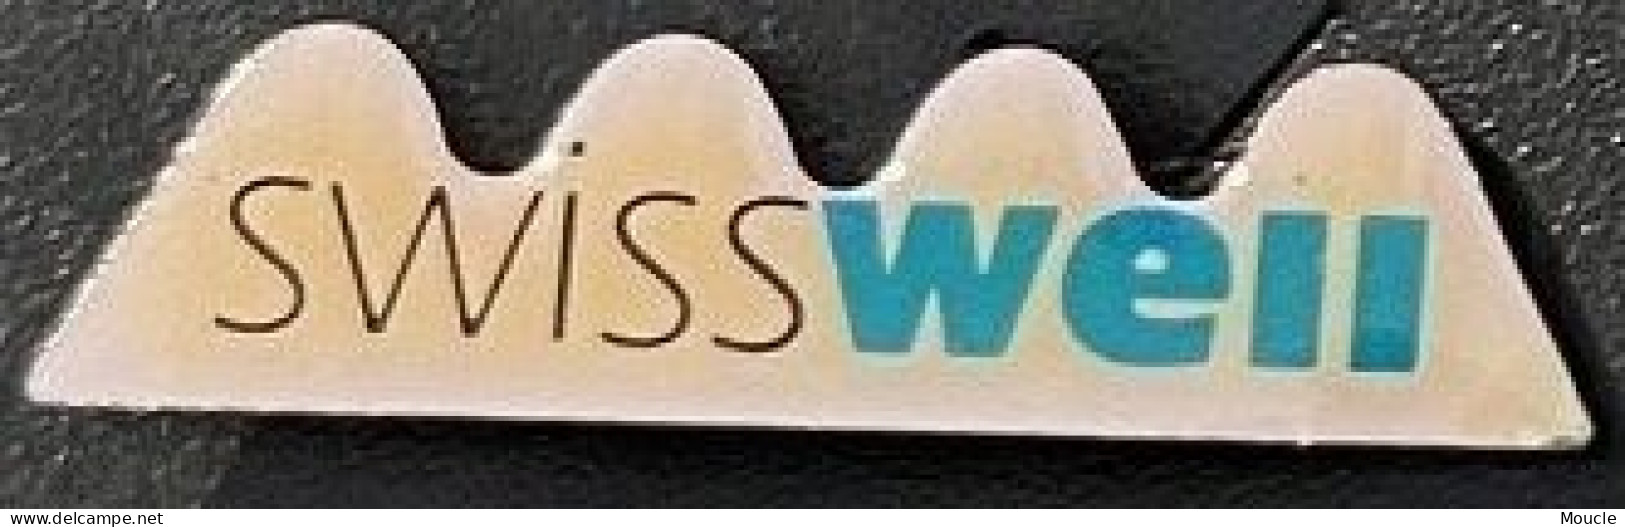 SWISSWELL - SWISS WELL  - (34) - Trademarks